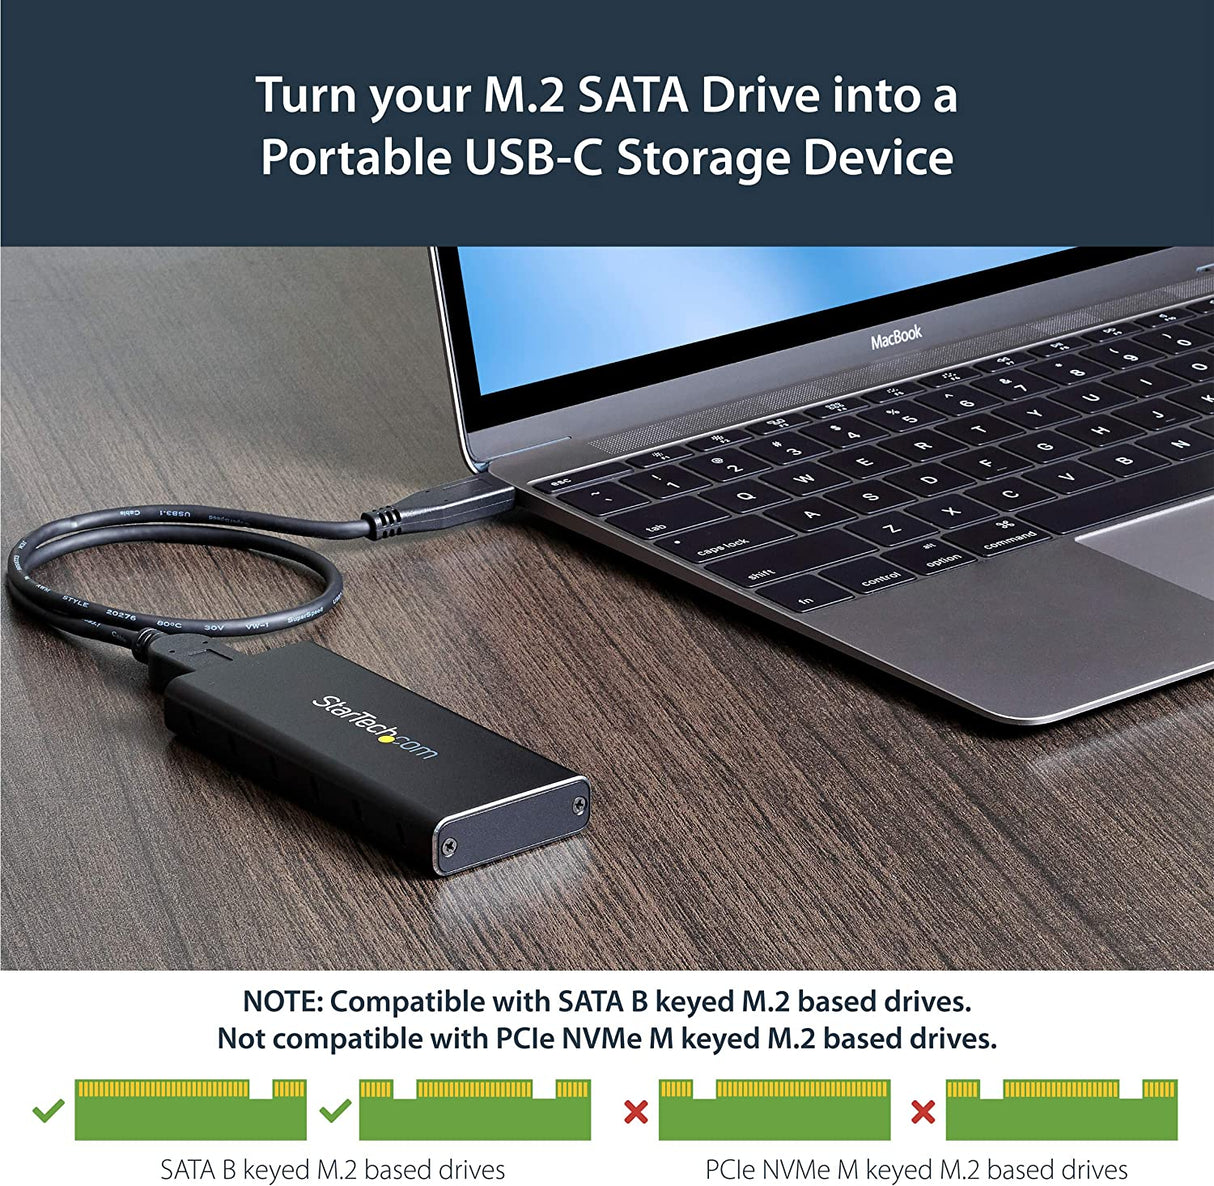 StarTech.com M.2 SSD Enclosure for M.2 SATA SSDs - USB 3.1 (10Gbps) with USB-C Cable - External Enclosure for USB-C Host - Aluminum (SM21BMU31C3) Basic M.2 SATA